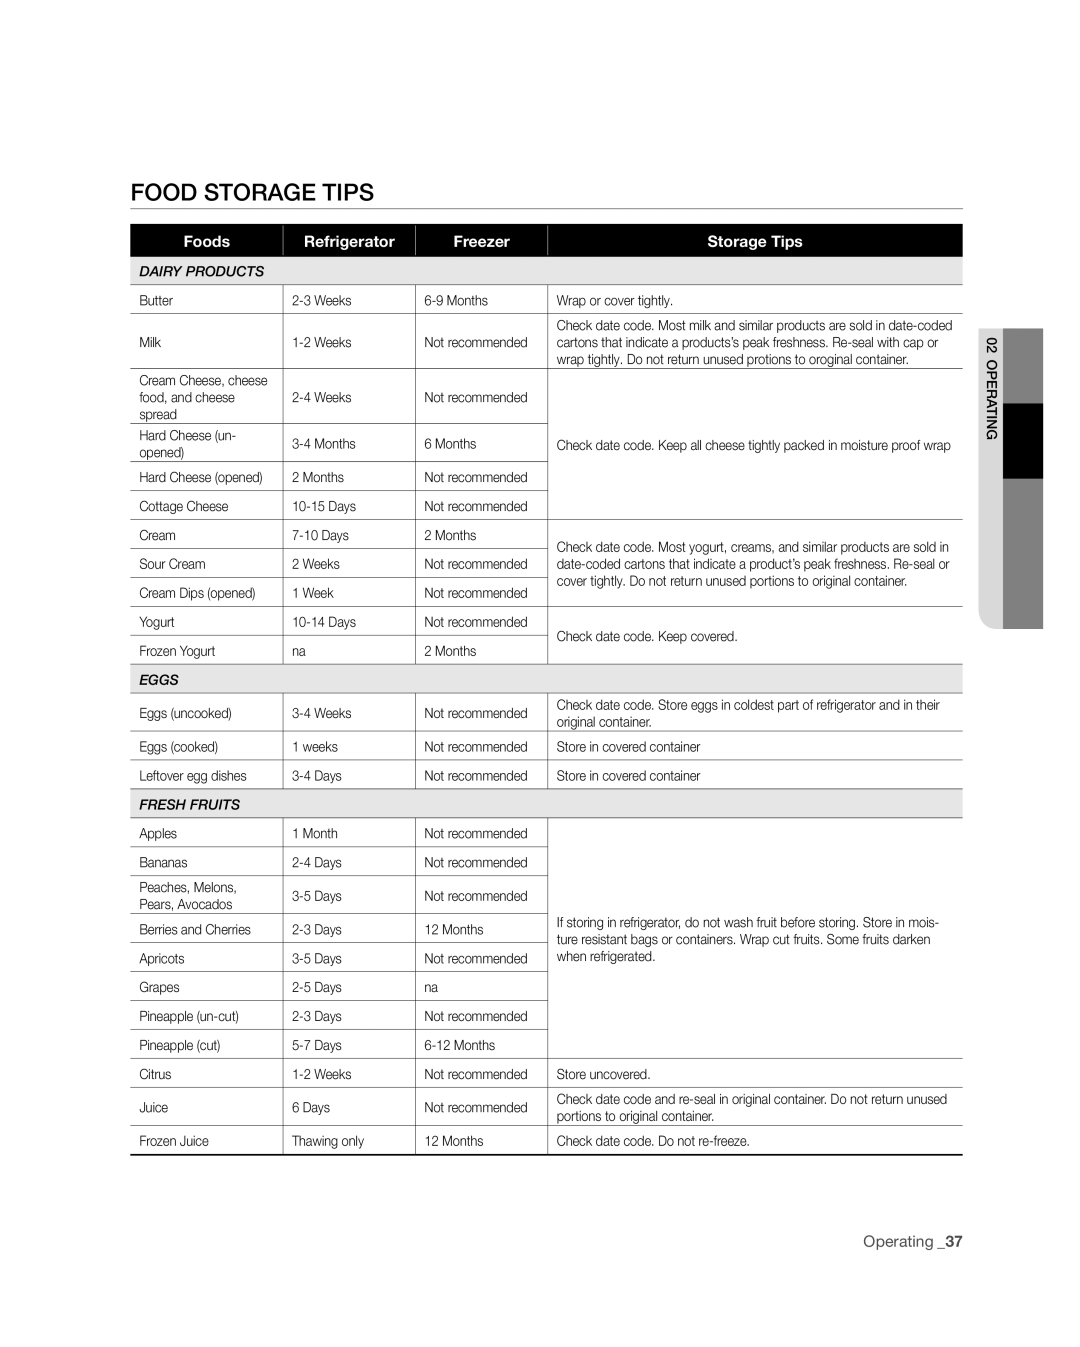 Samsung RF4287HA user manual Food storage tips, Foods, Refrigerator, Freezer, Storage Tips, Operating 